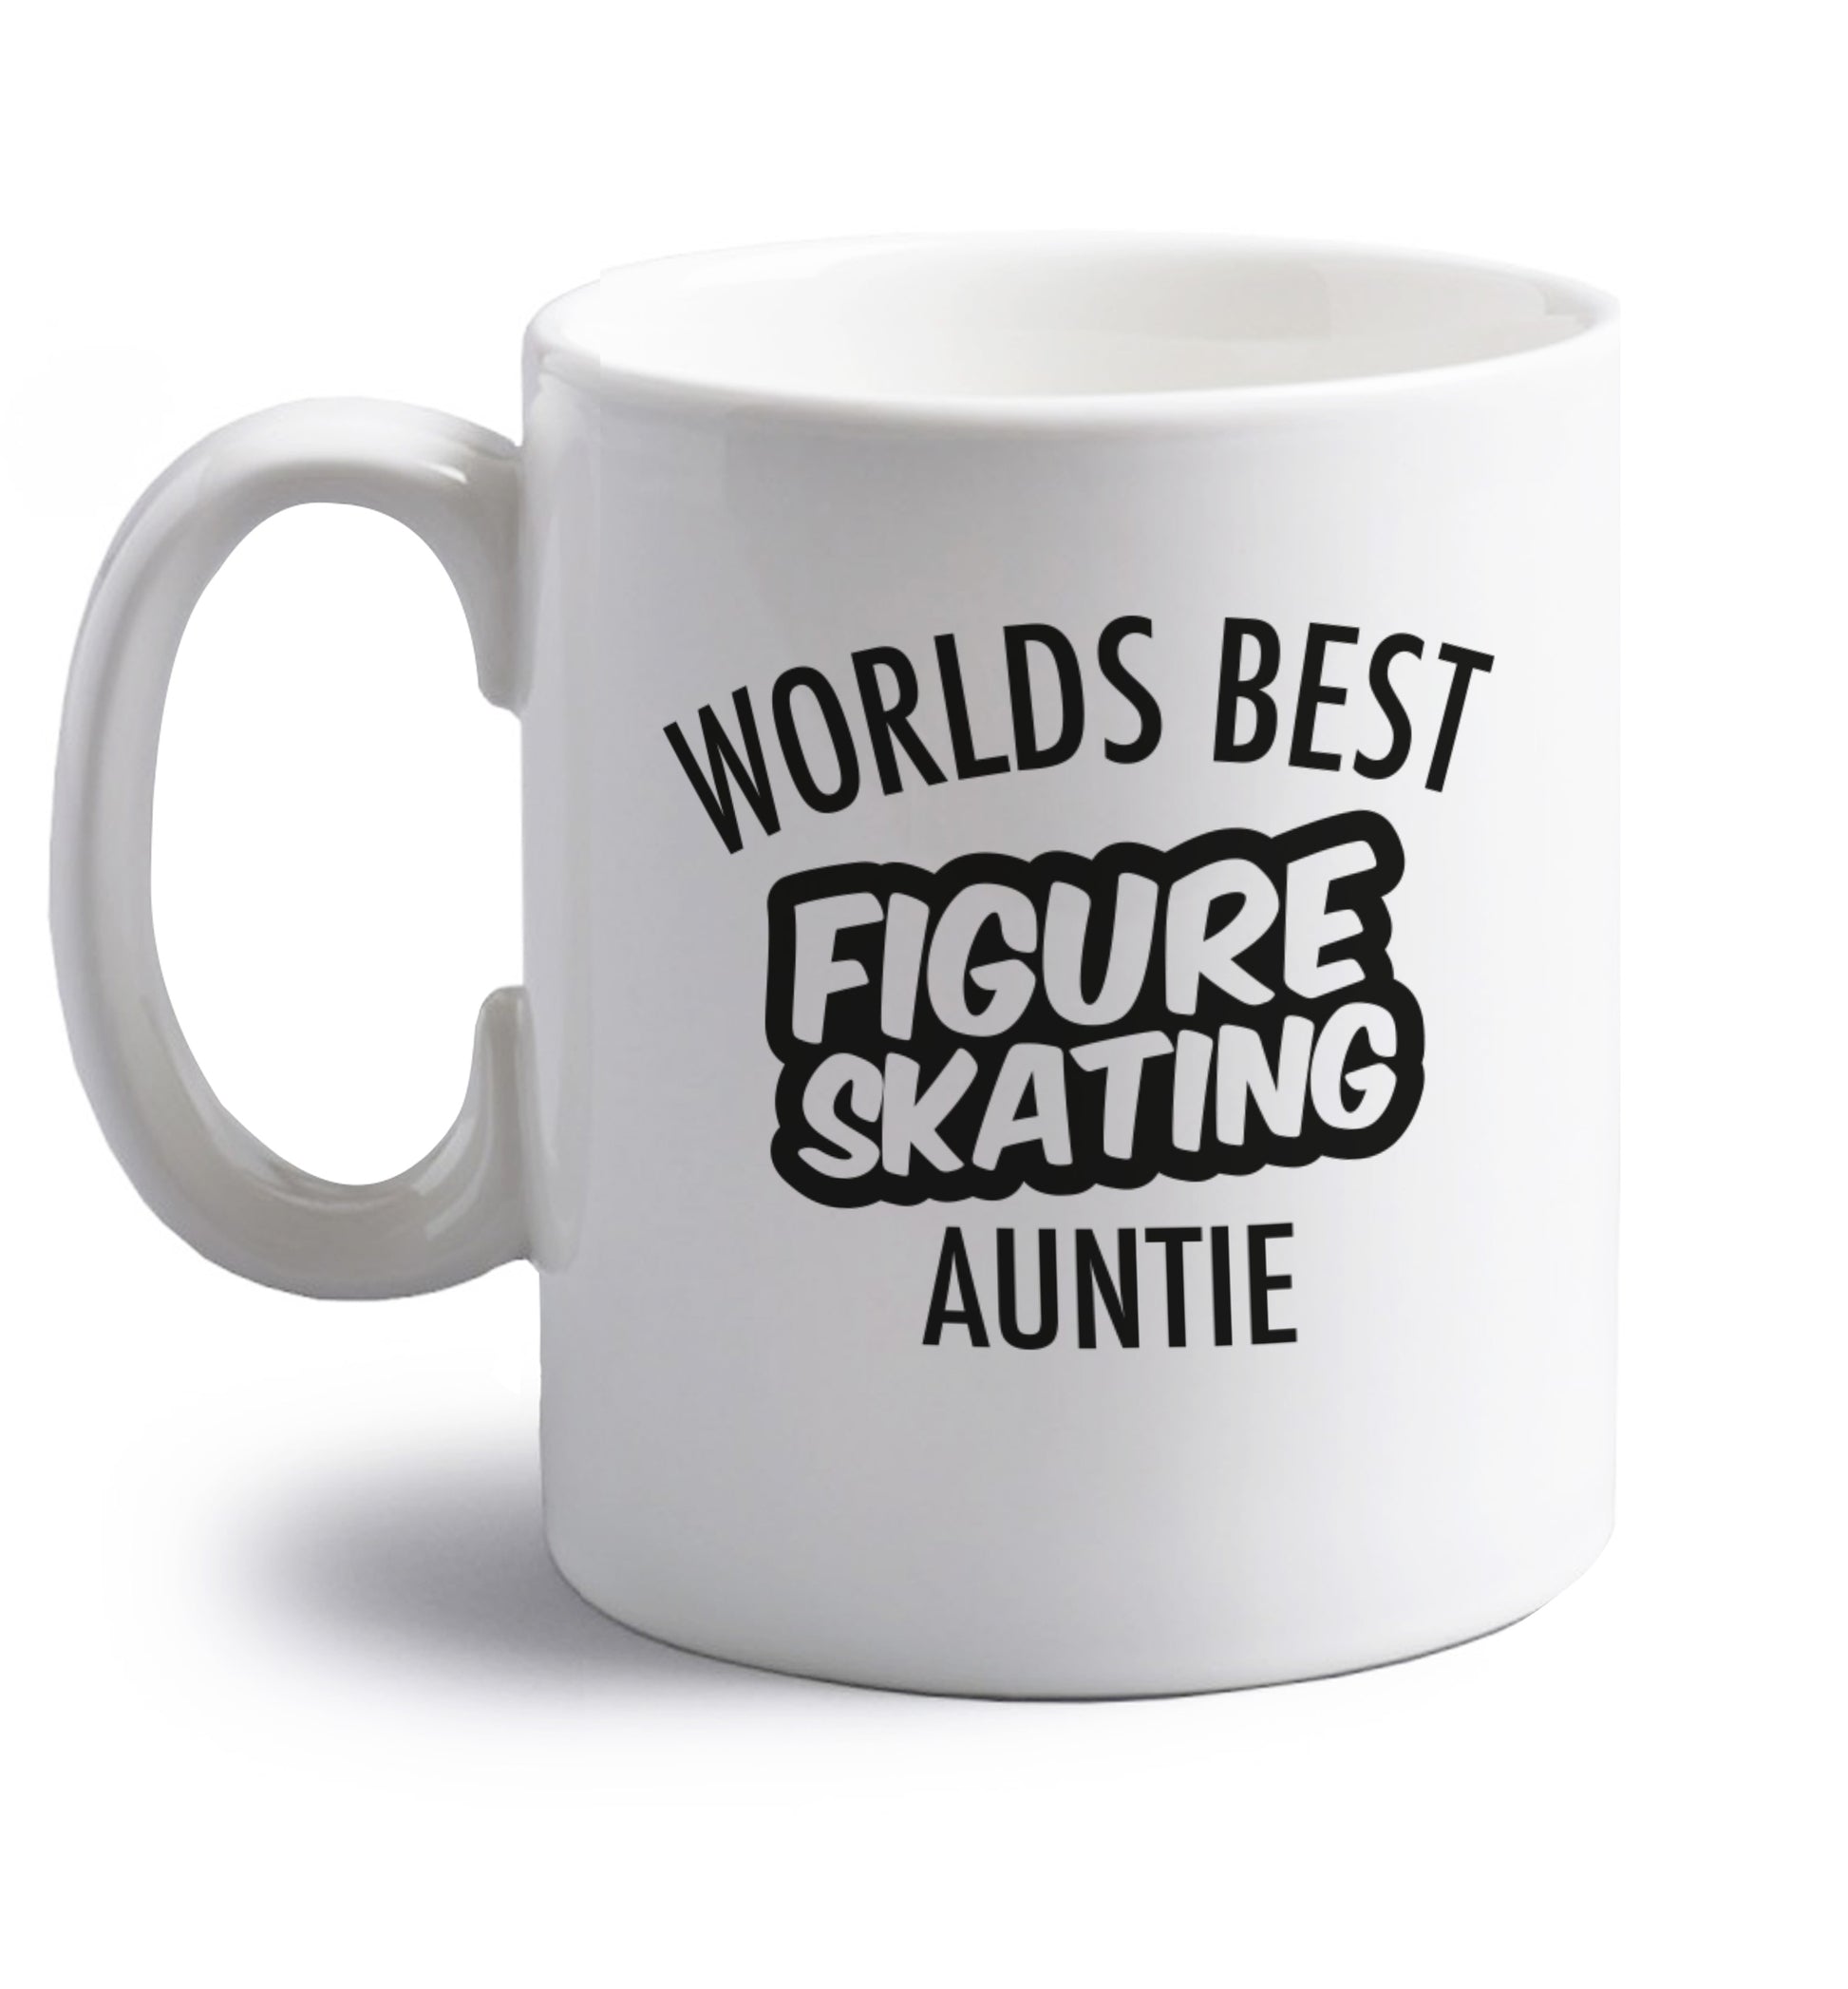 Worlds best figure skating auntie right handed white ceramic mug 